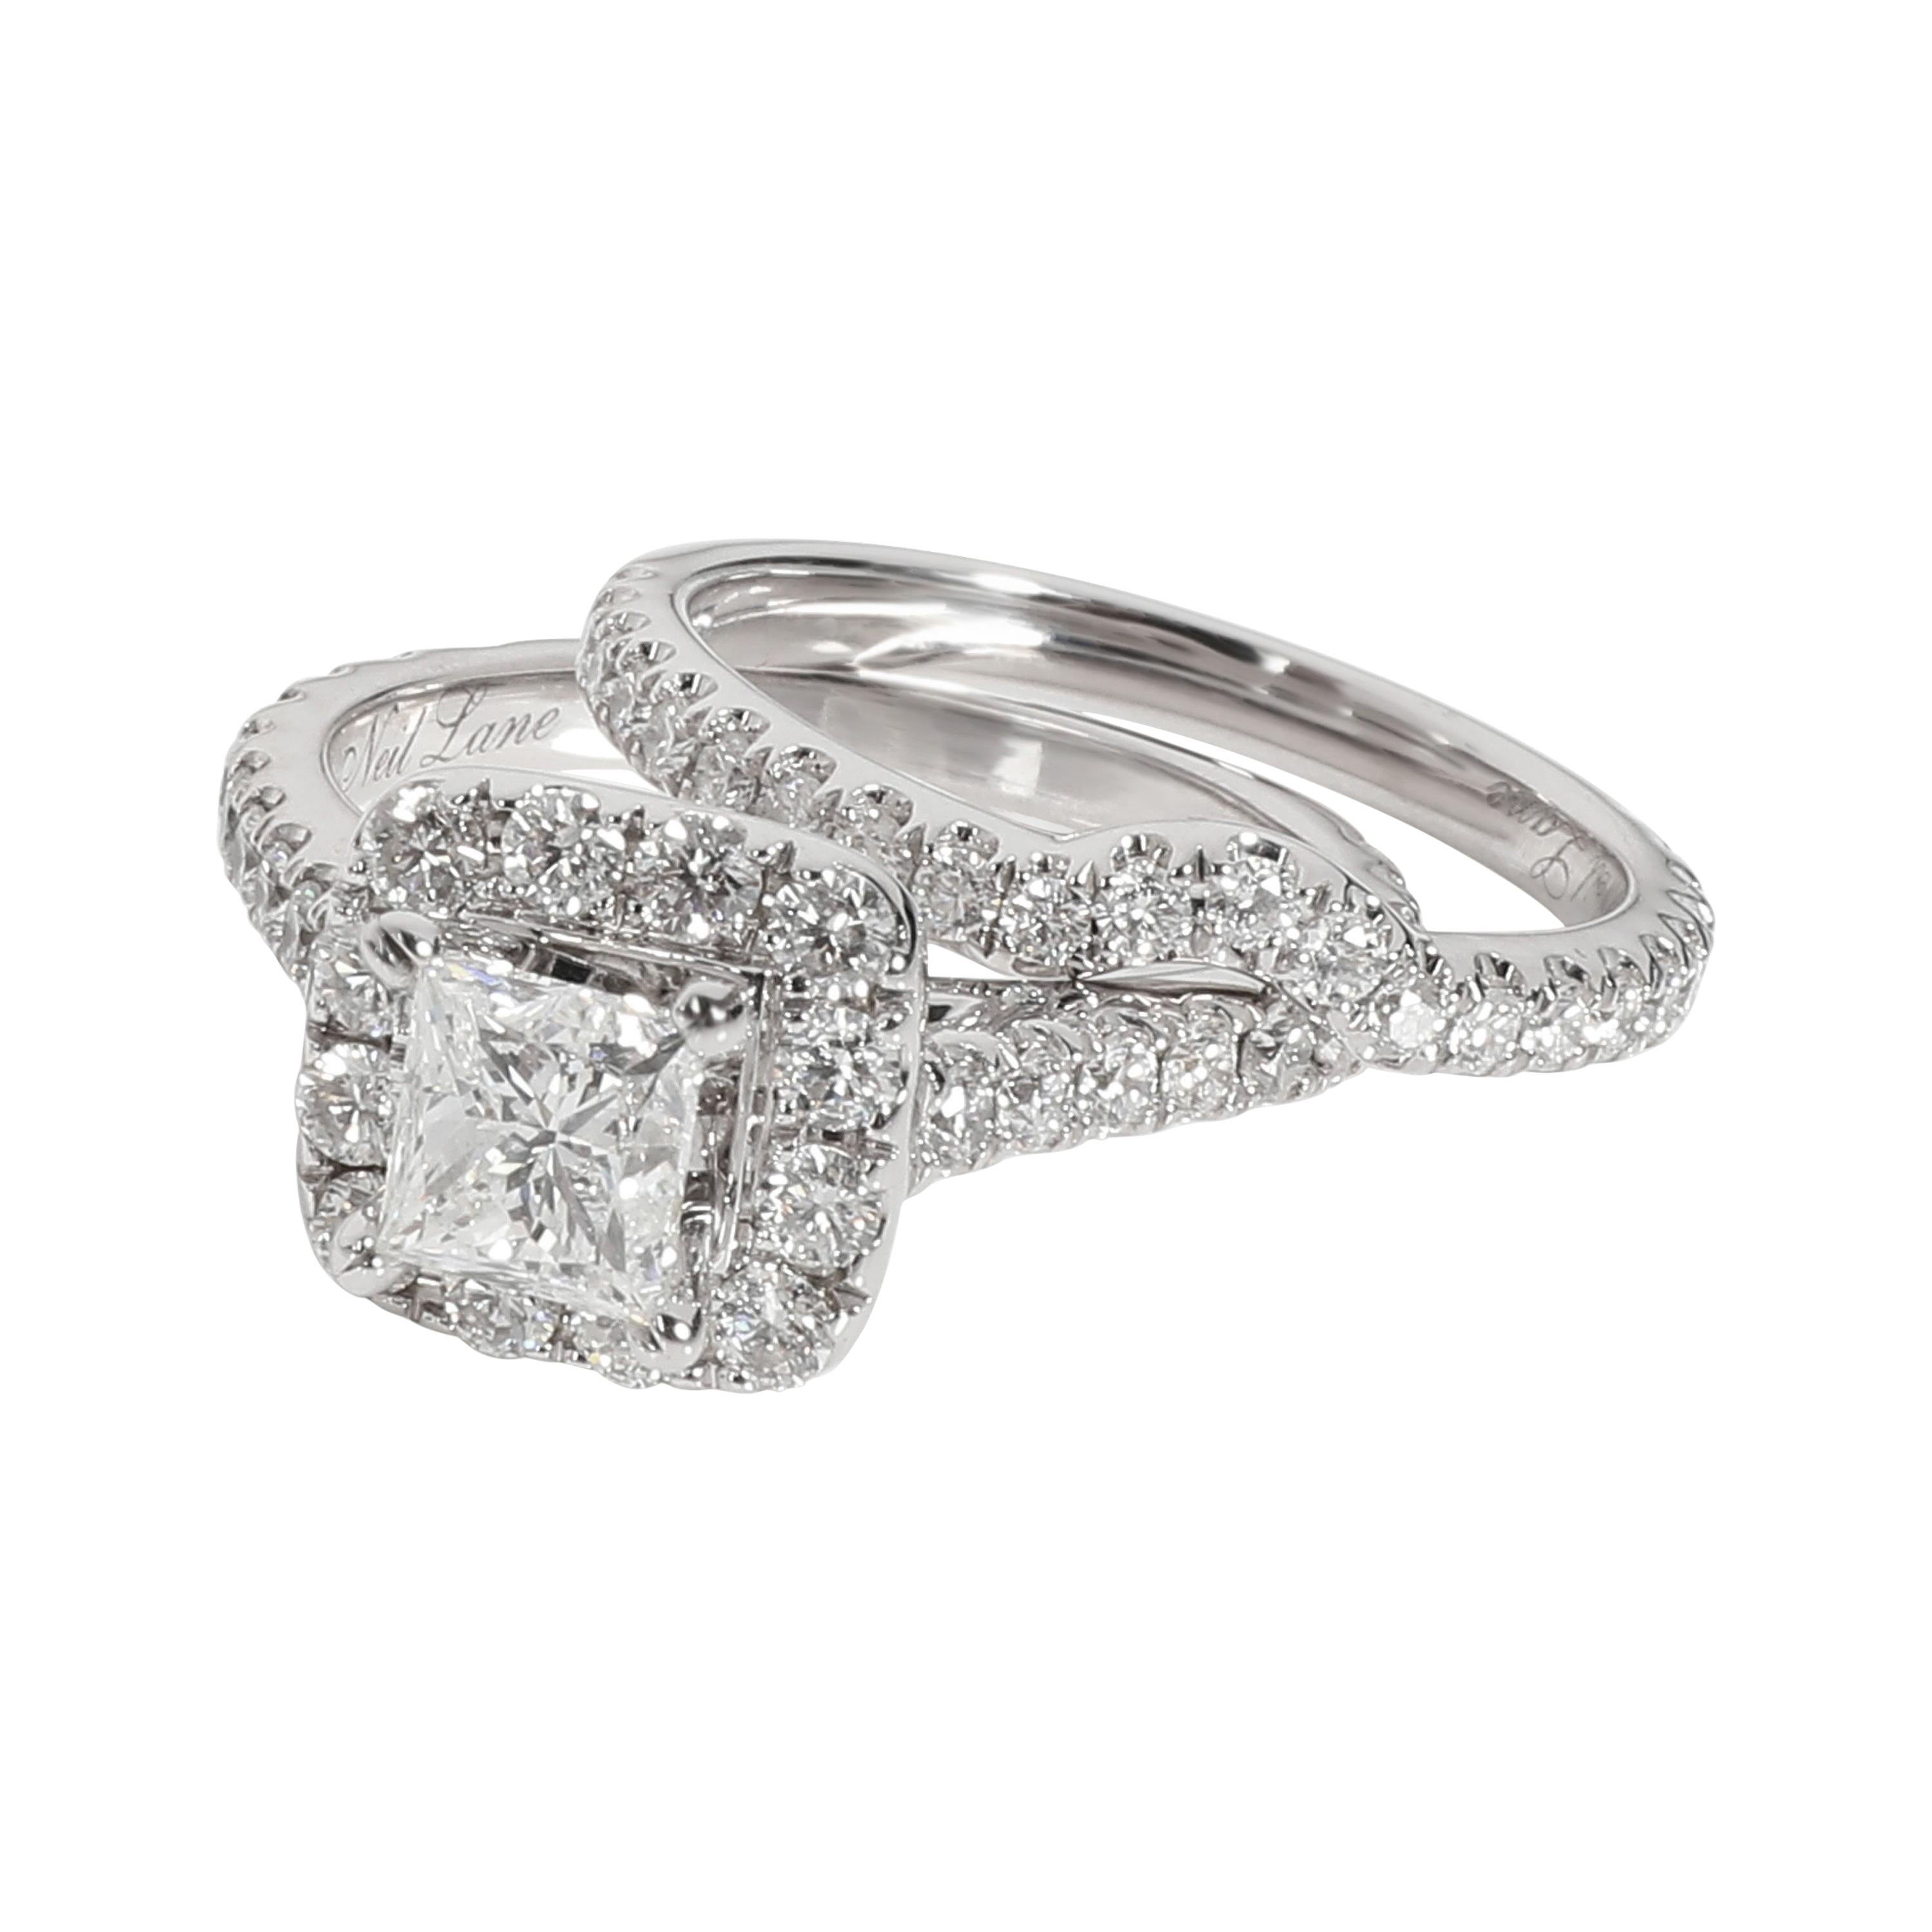 Neil Lane Halo Princess Diamond Engagement Set in 14K White Gold 2.5 CTW